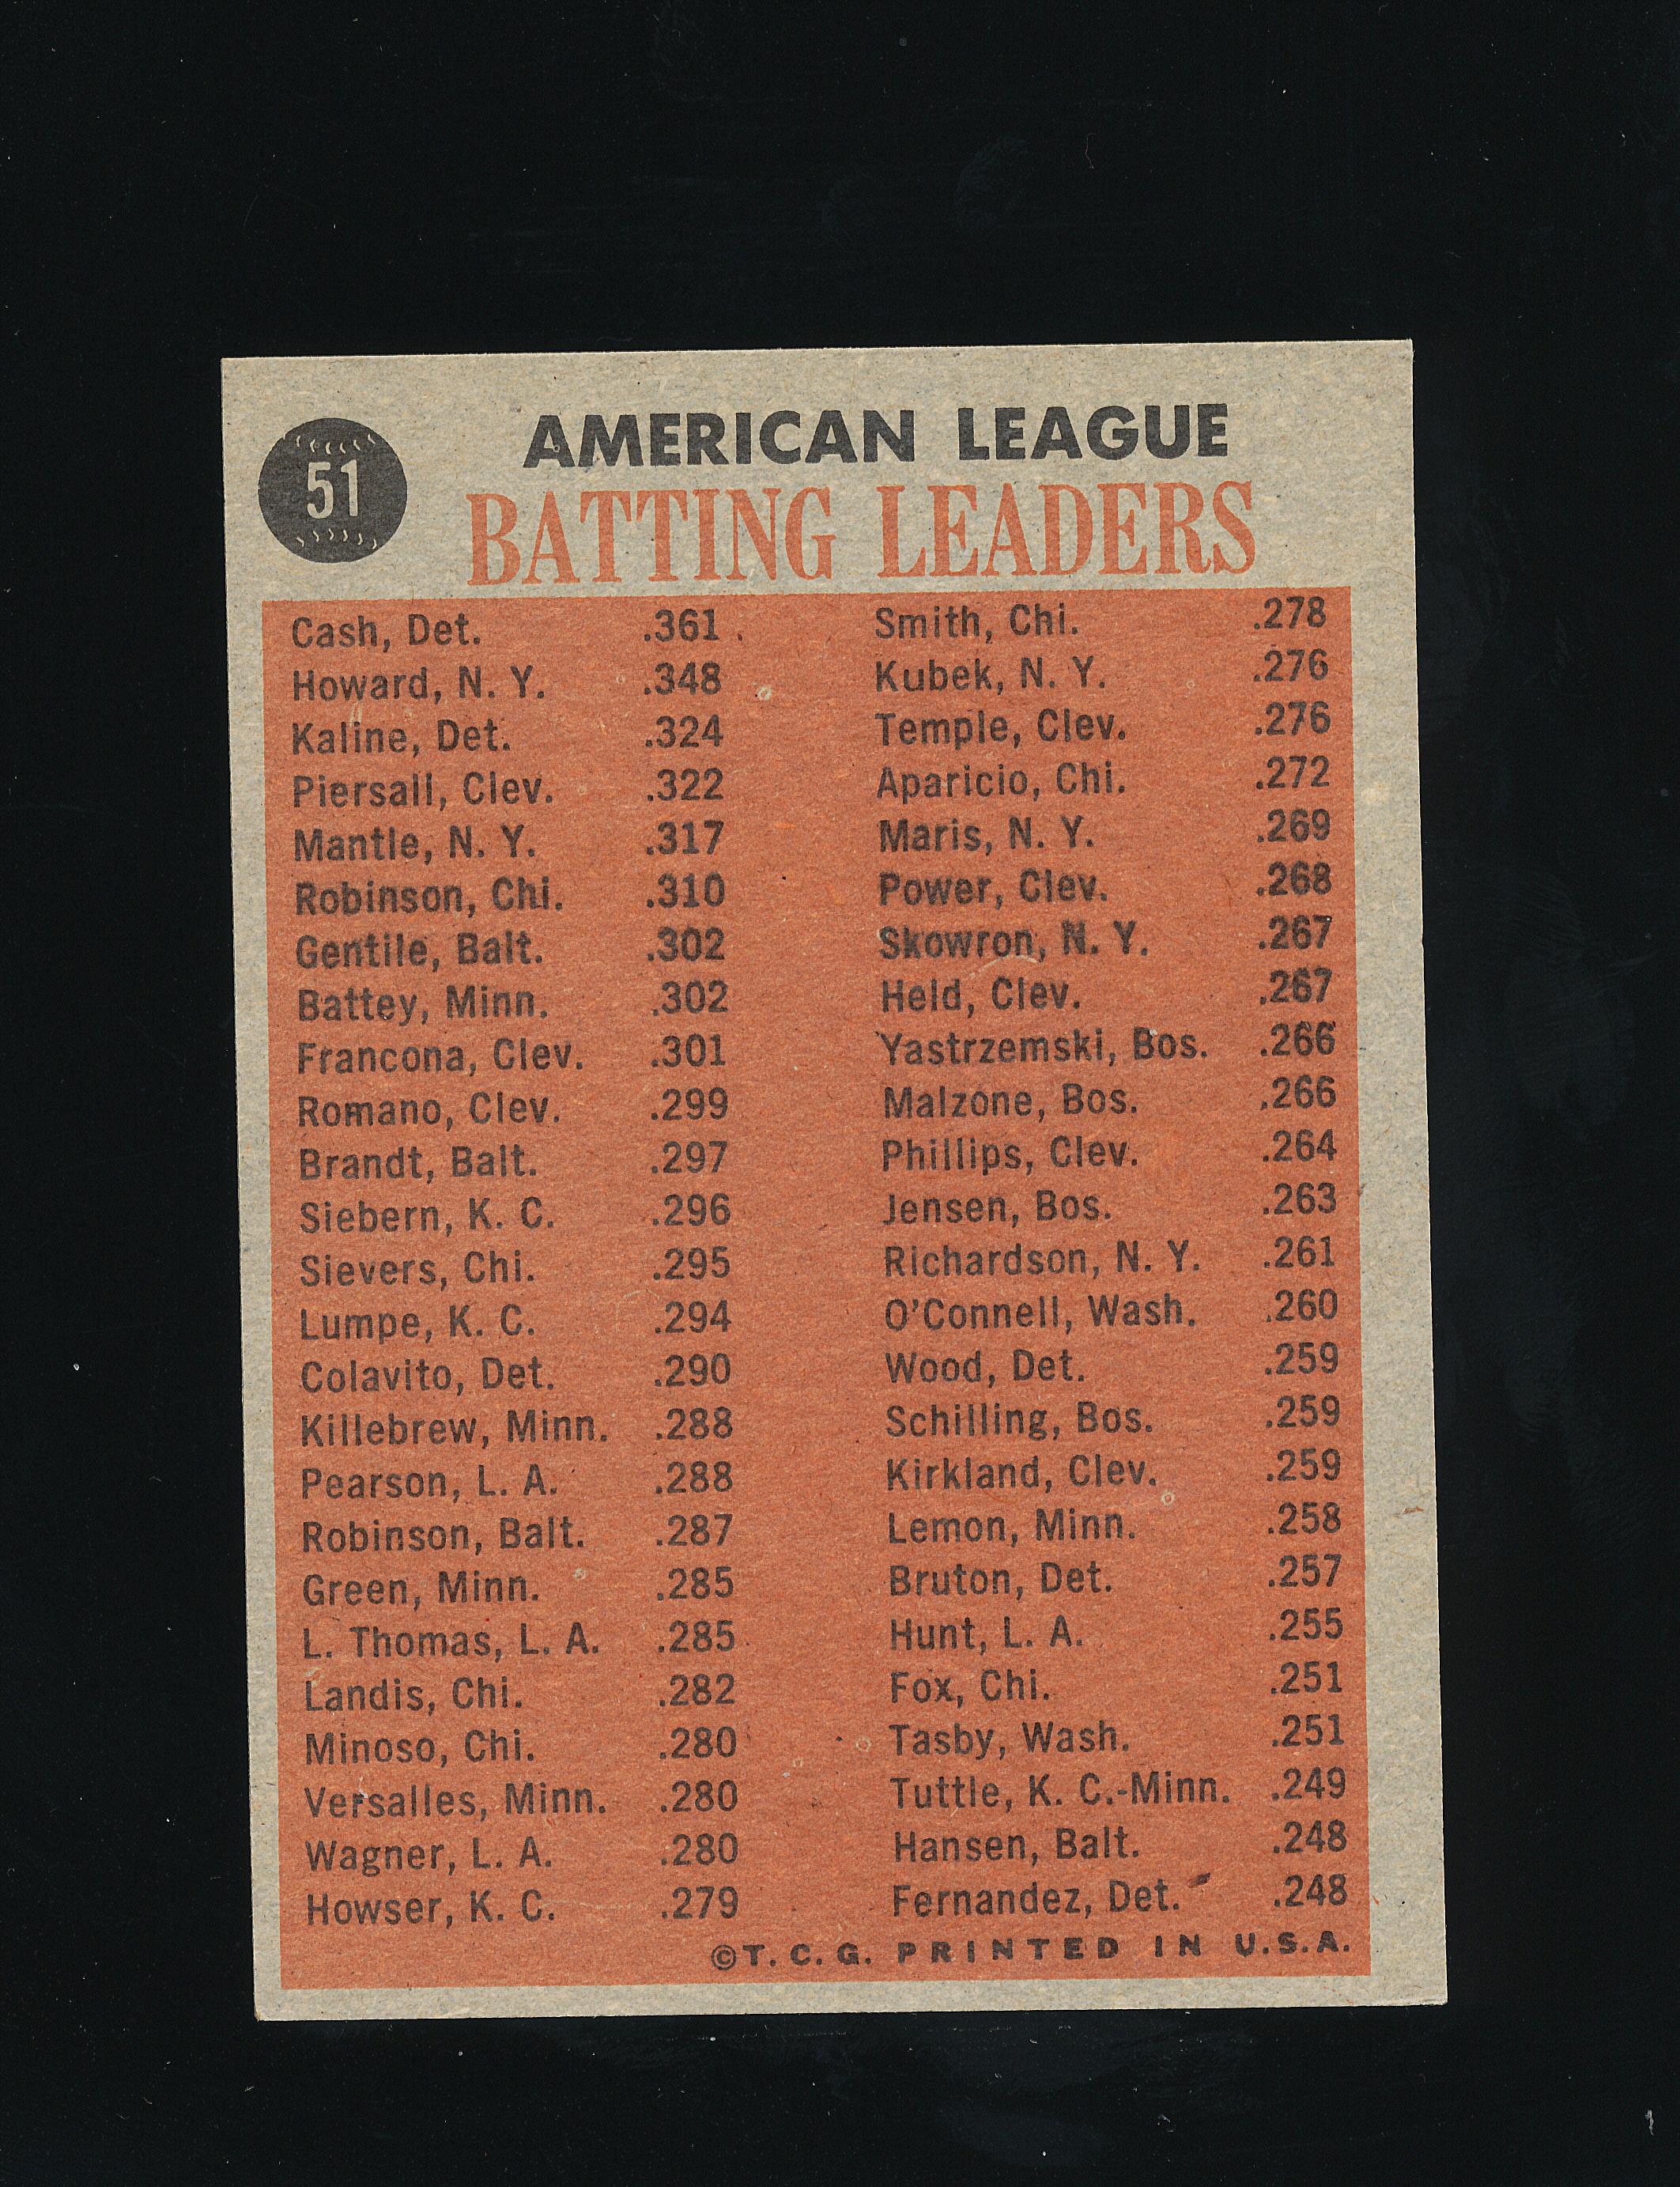 1962 Topps Baseball Card #51 American League Batting Leaders: Norm Cash, El